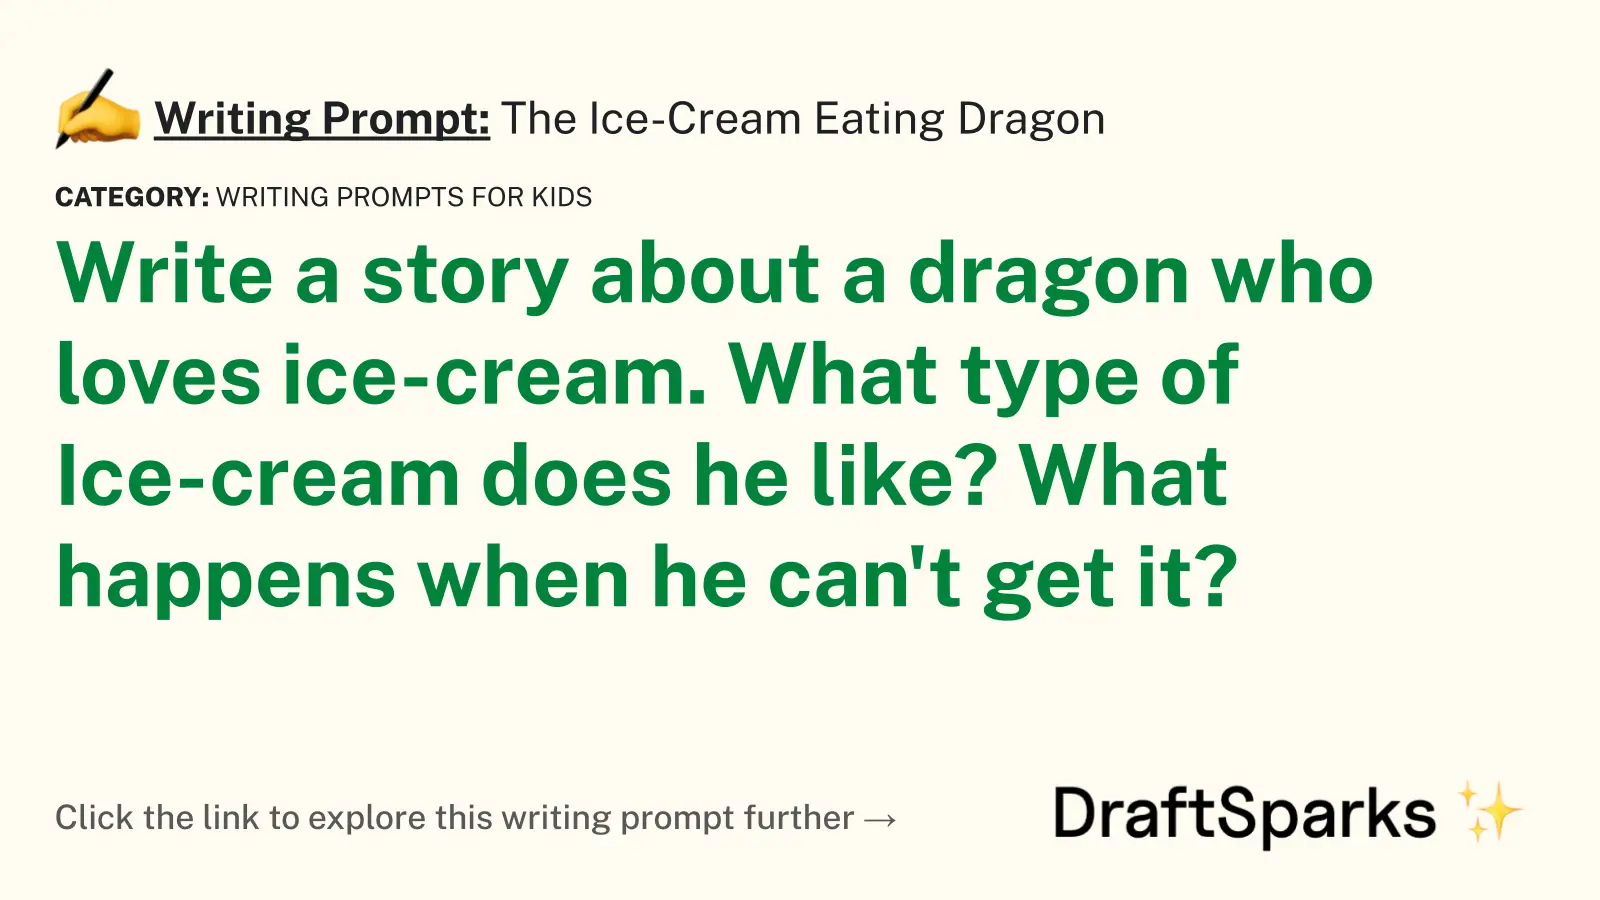 The Ice-Cream Eating Dragon